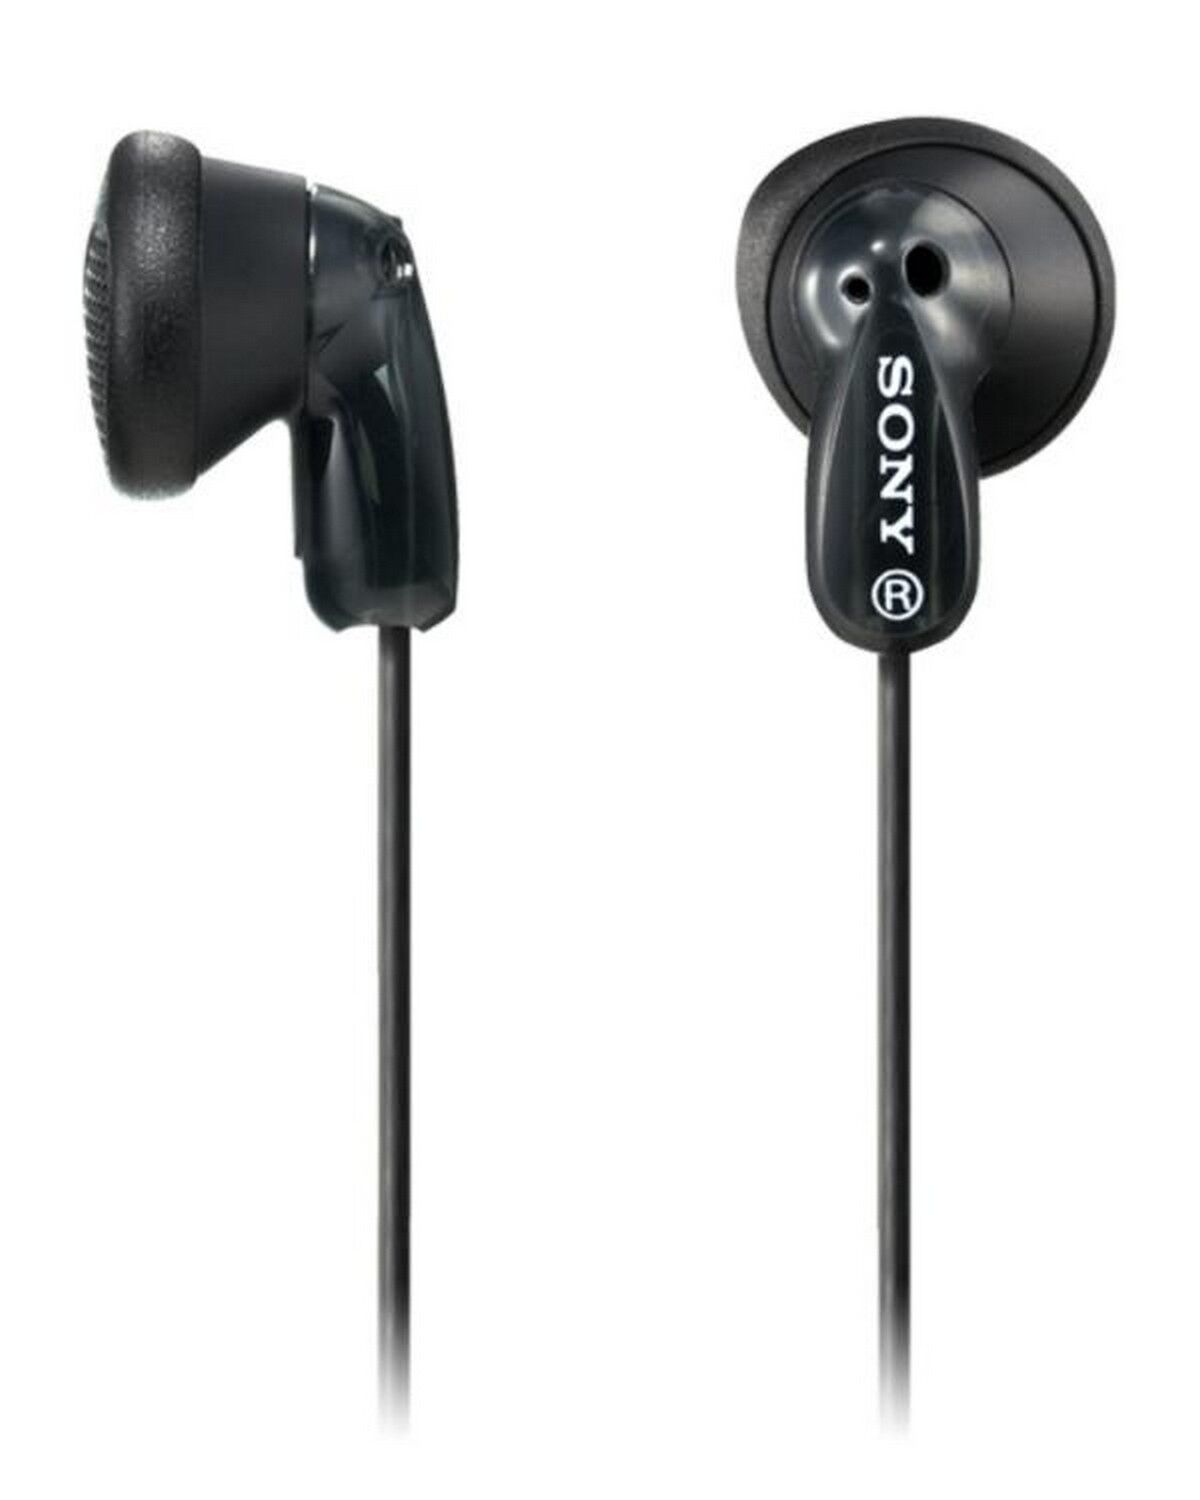 Sony Auriculares C/ Fios (preto) E9lpb - Sony